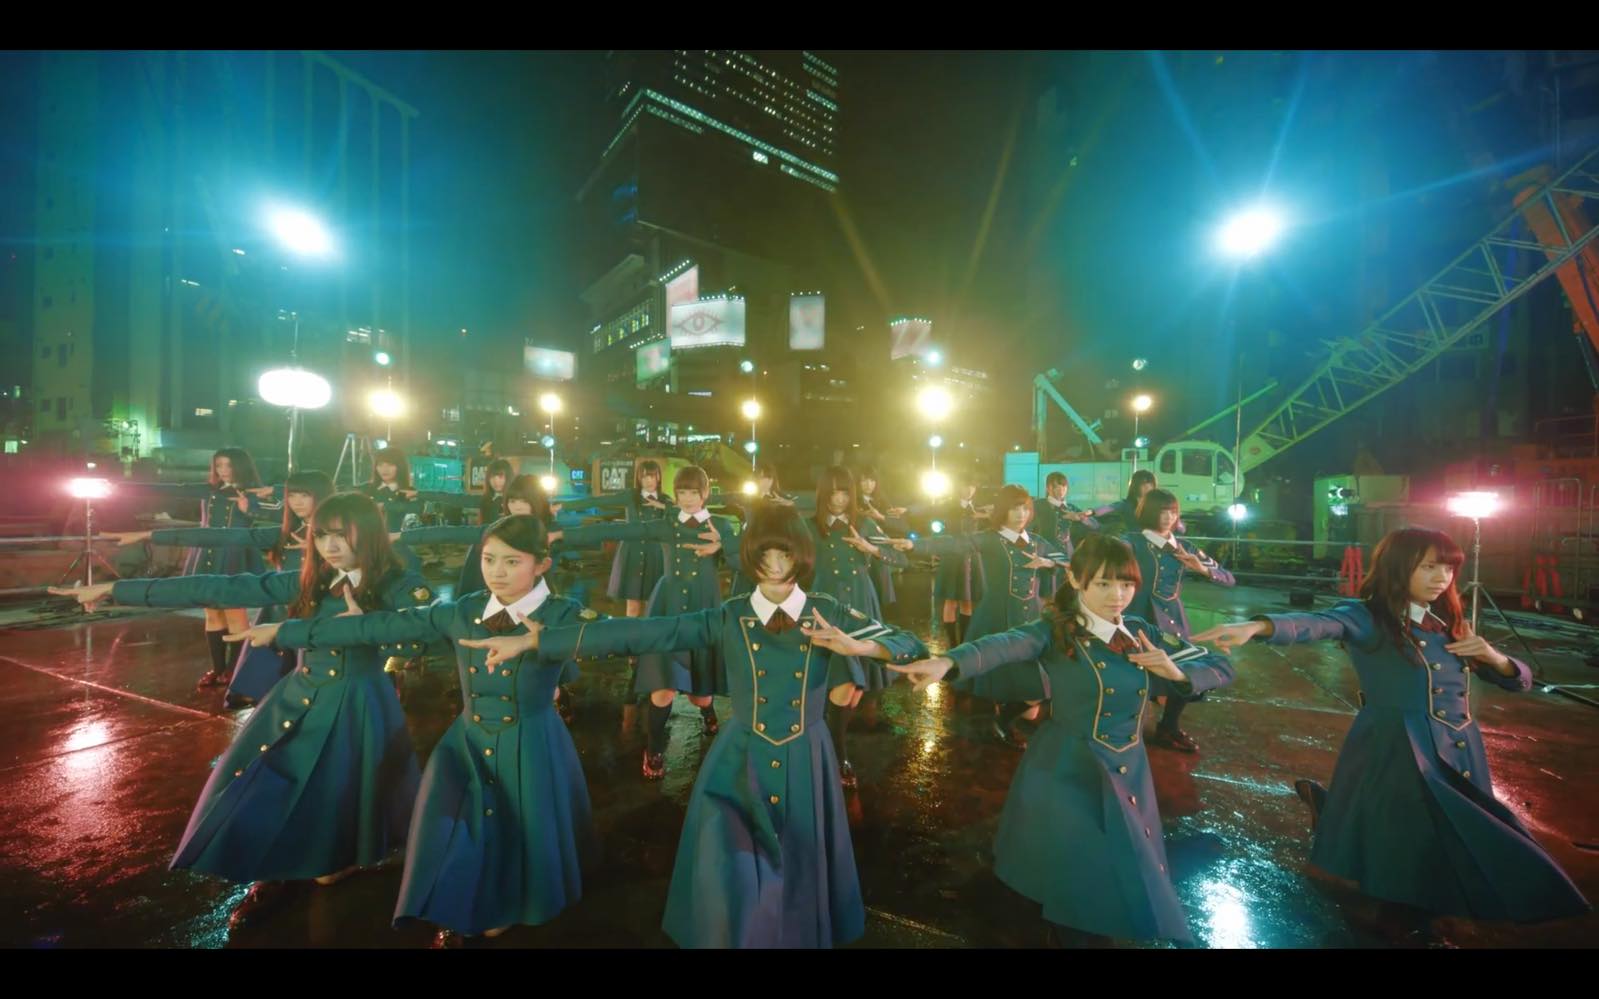 Keyakizaka46 Break Ground on the Future in MV for Debut Single “Silent Majority”!